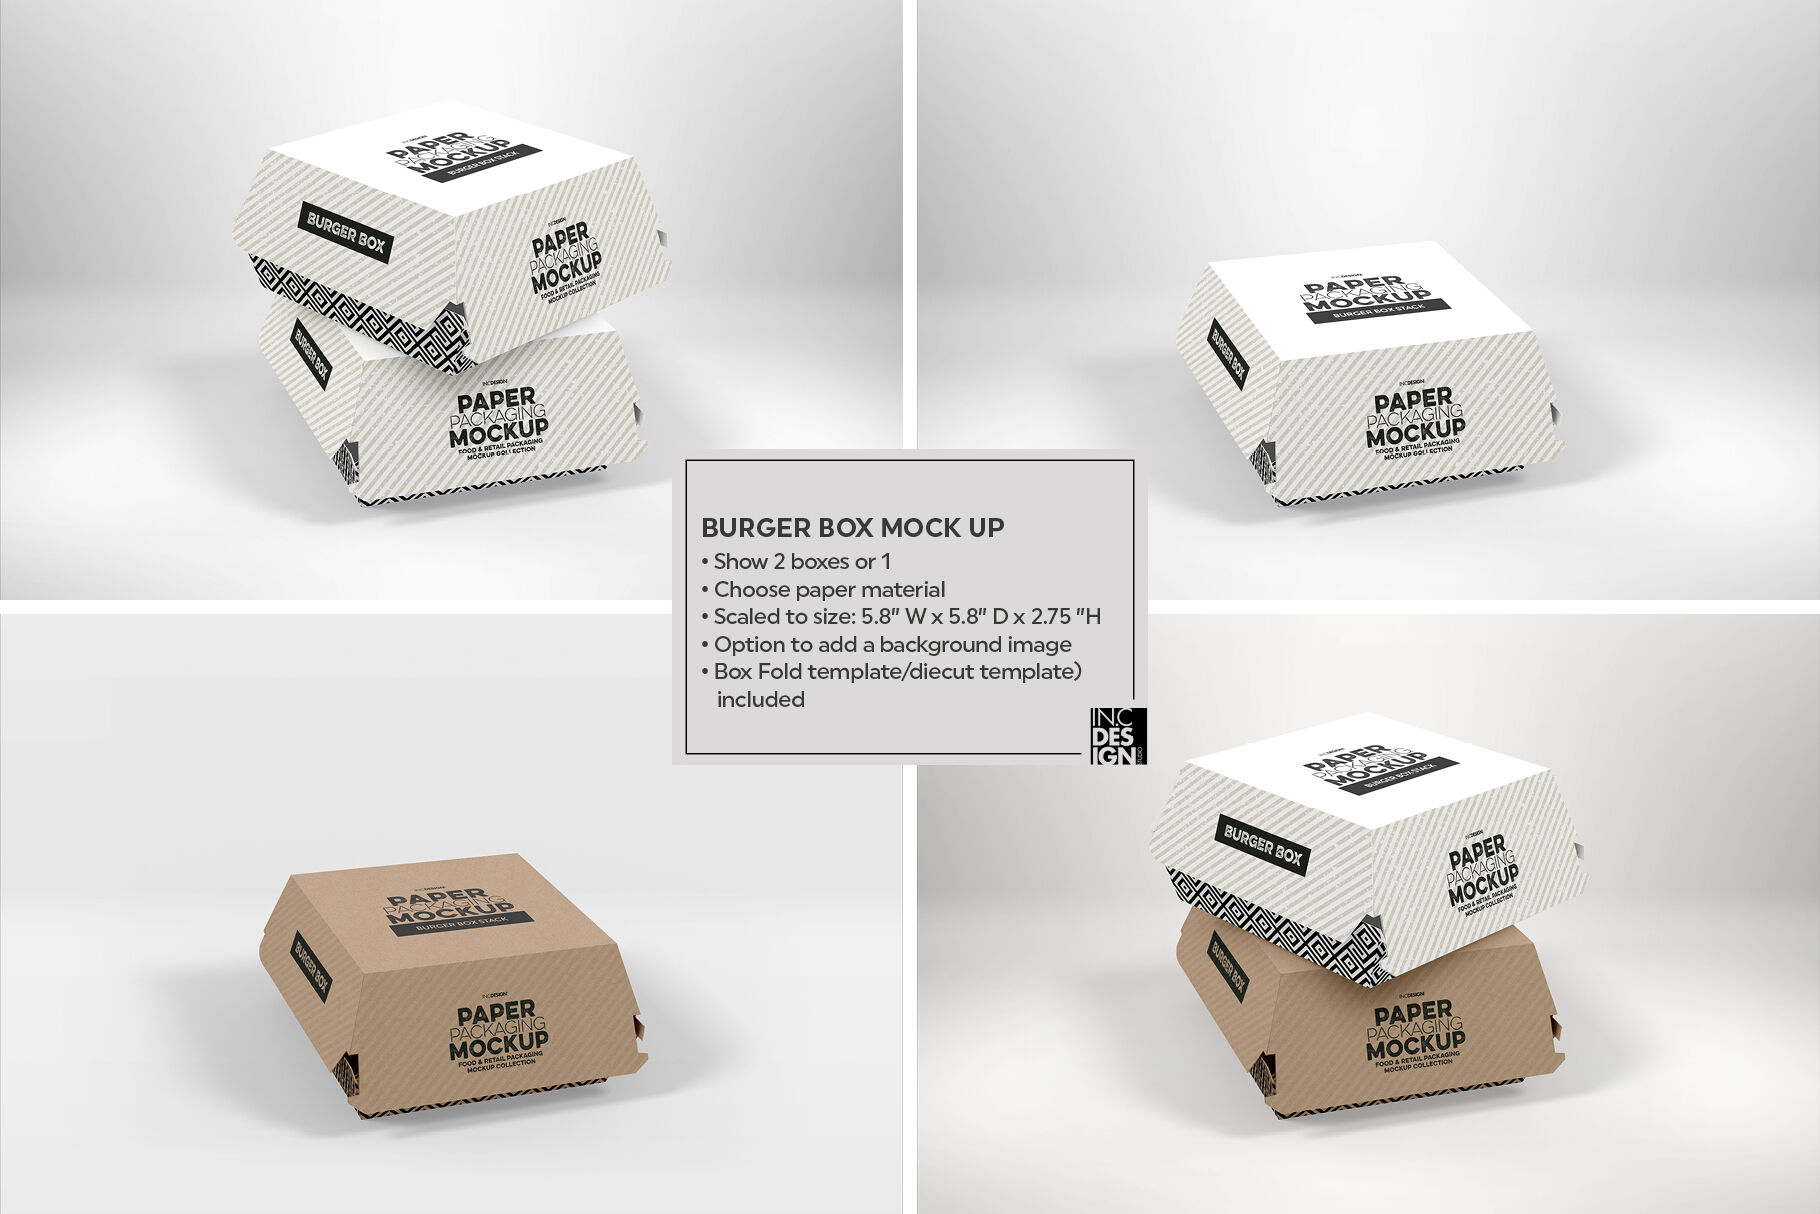 Download Burger Box Packaging MockUp By INC Design Studio | TheHungryJPEG.com